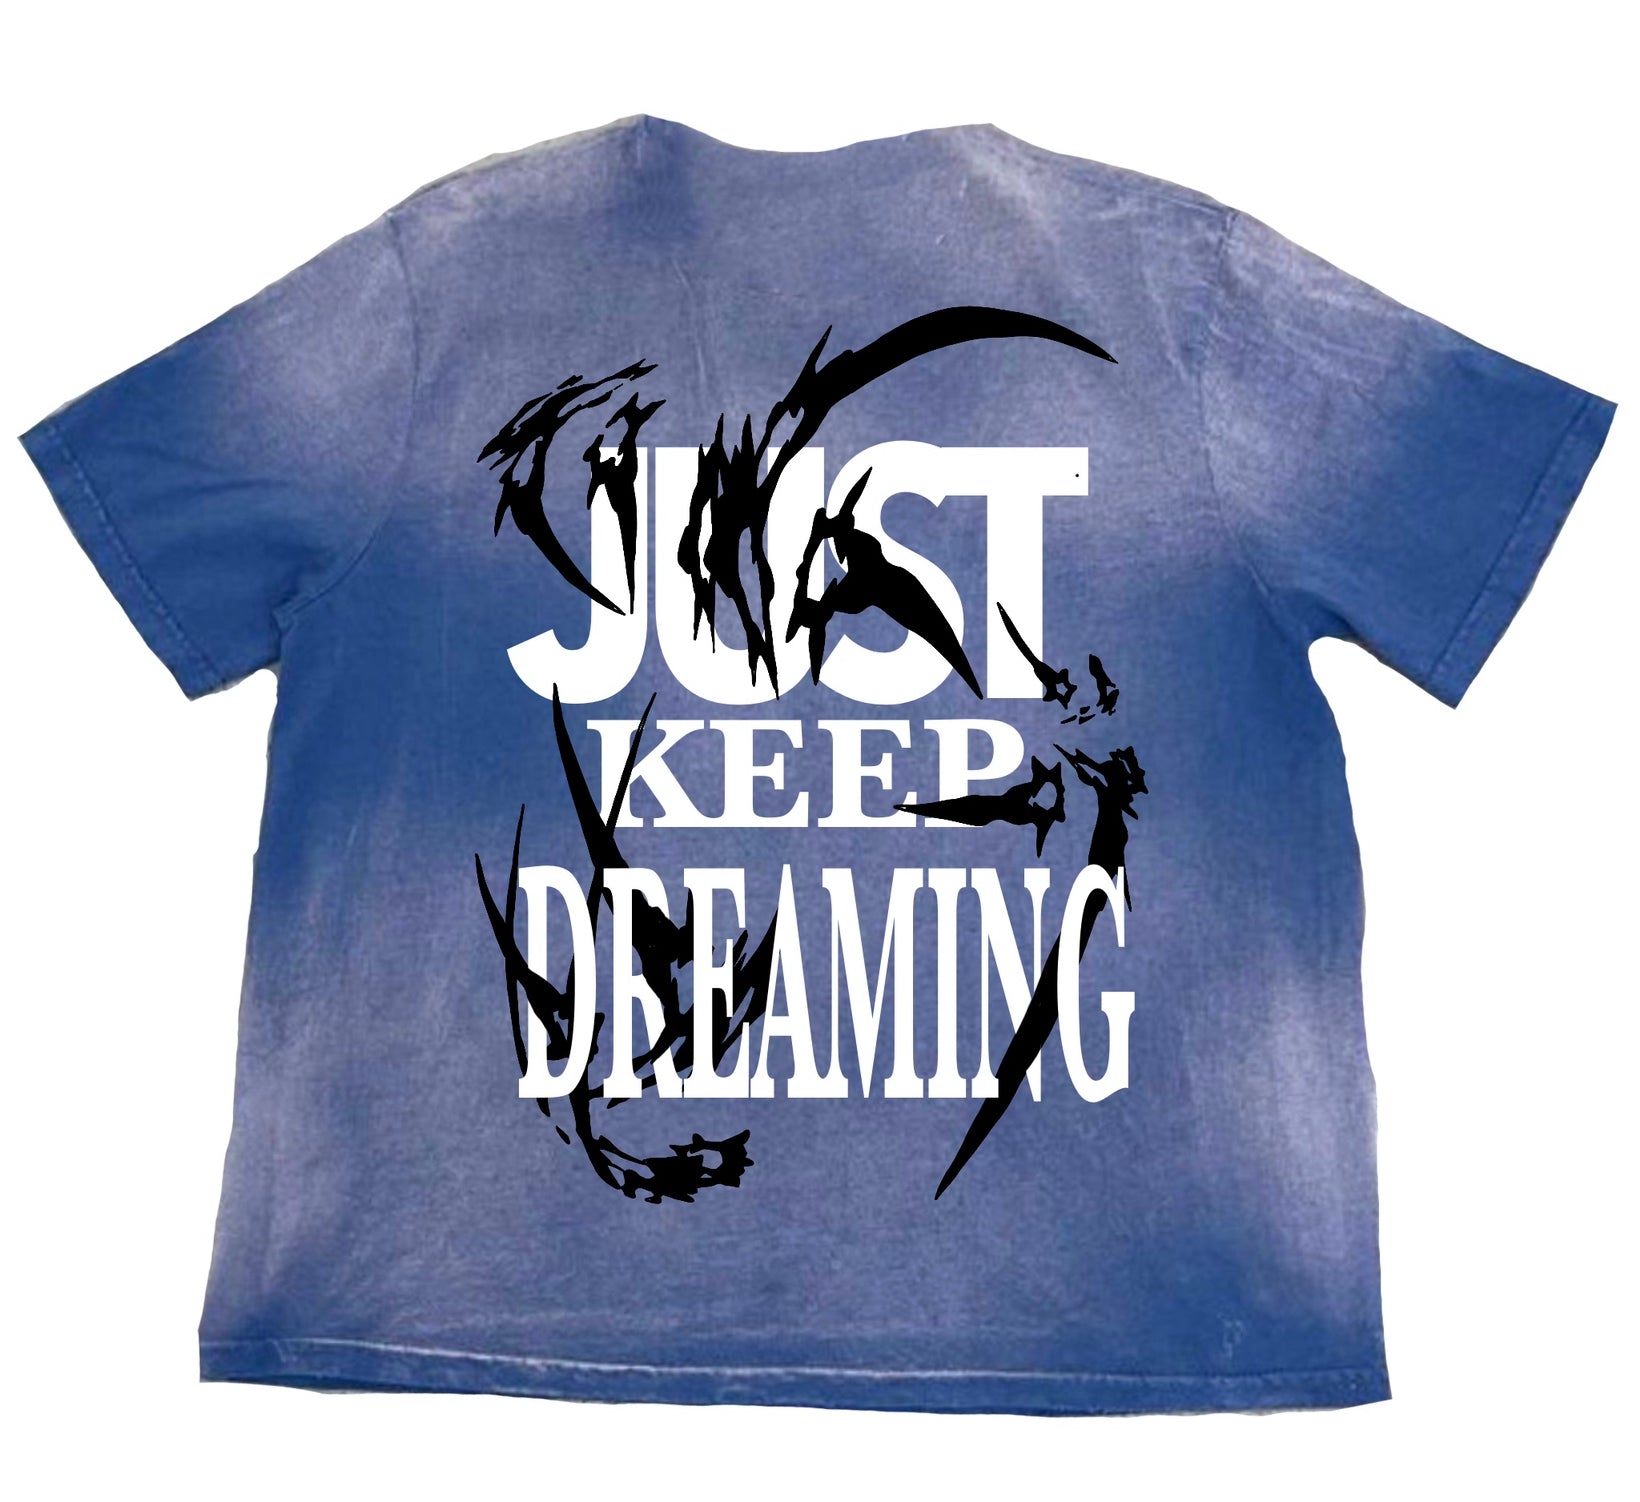 Just Keep Dreaming T-shirt - BLUE